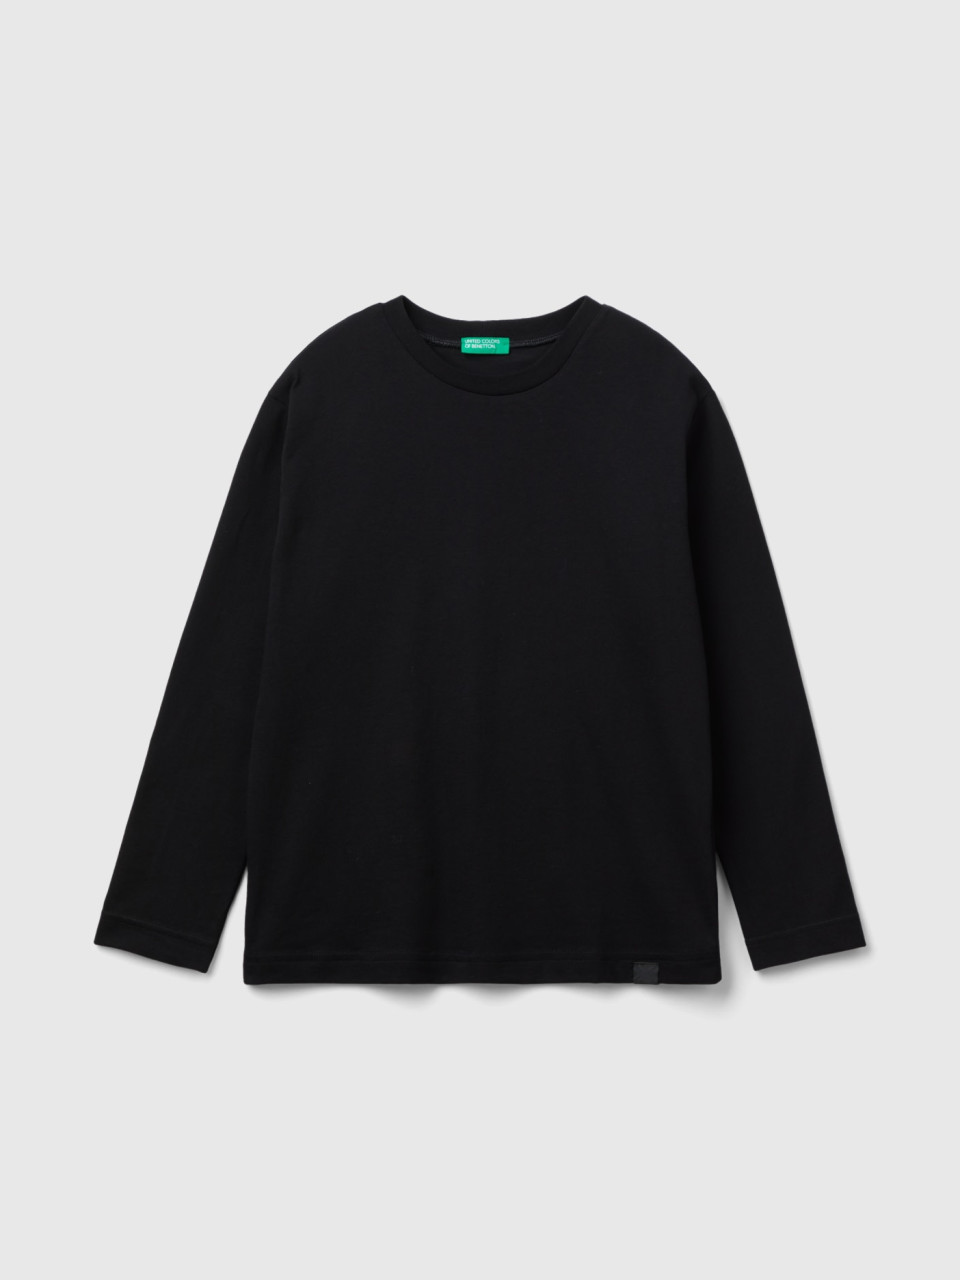 Benetton, 100% Organic Cotton Crew Neck T-shirt, Black, Kids